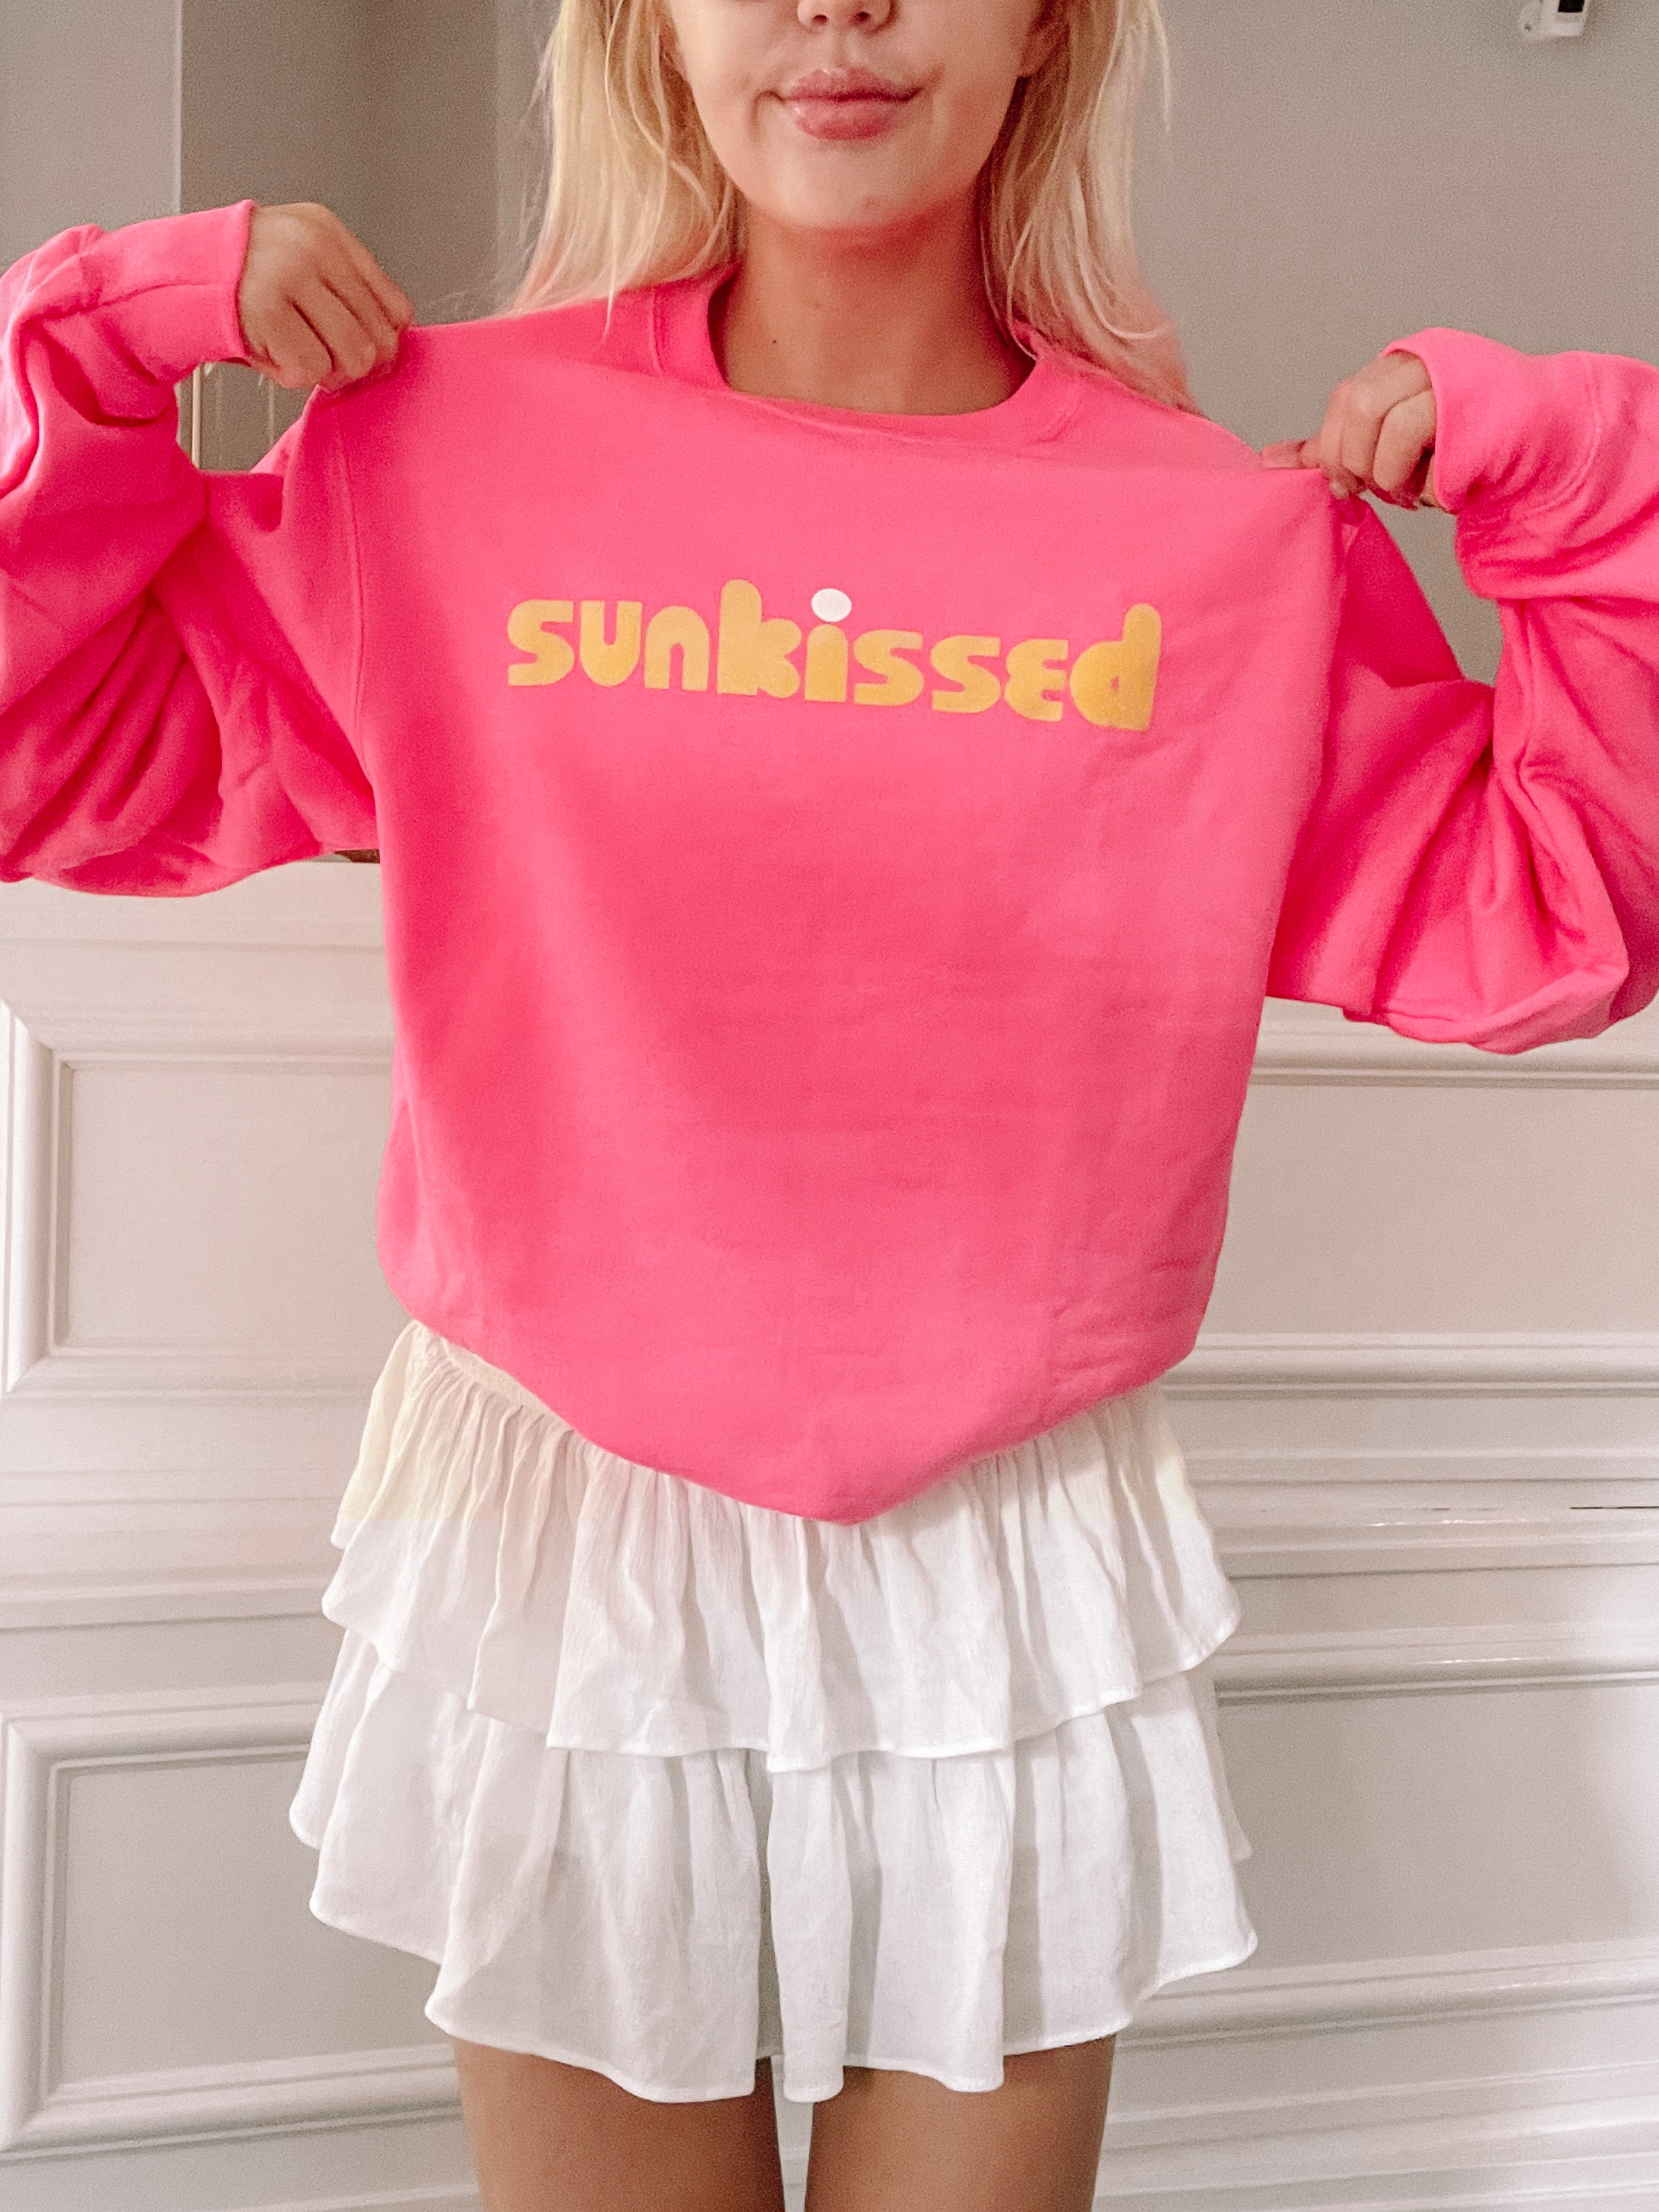 Sunkissed Sweatshirt | sassyshortcake.com